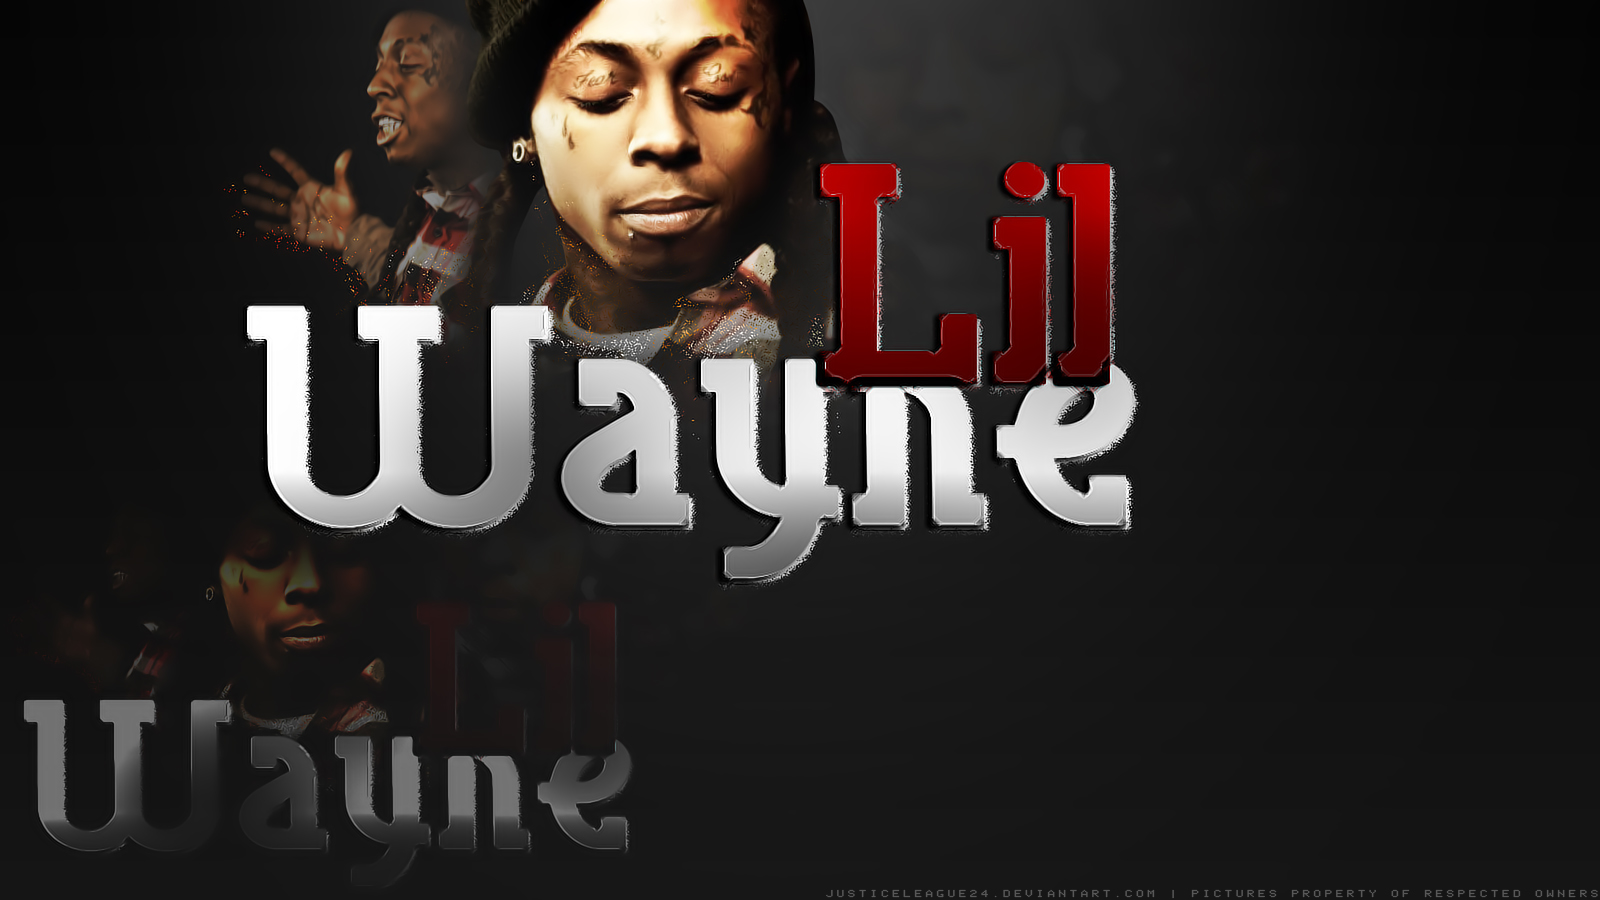 Lil Wayne Wallpaper Download